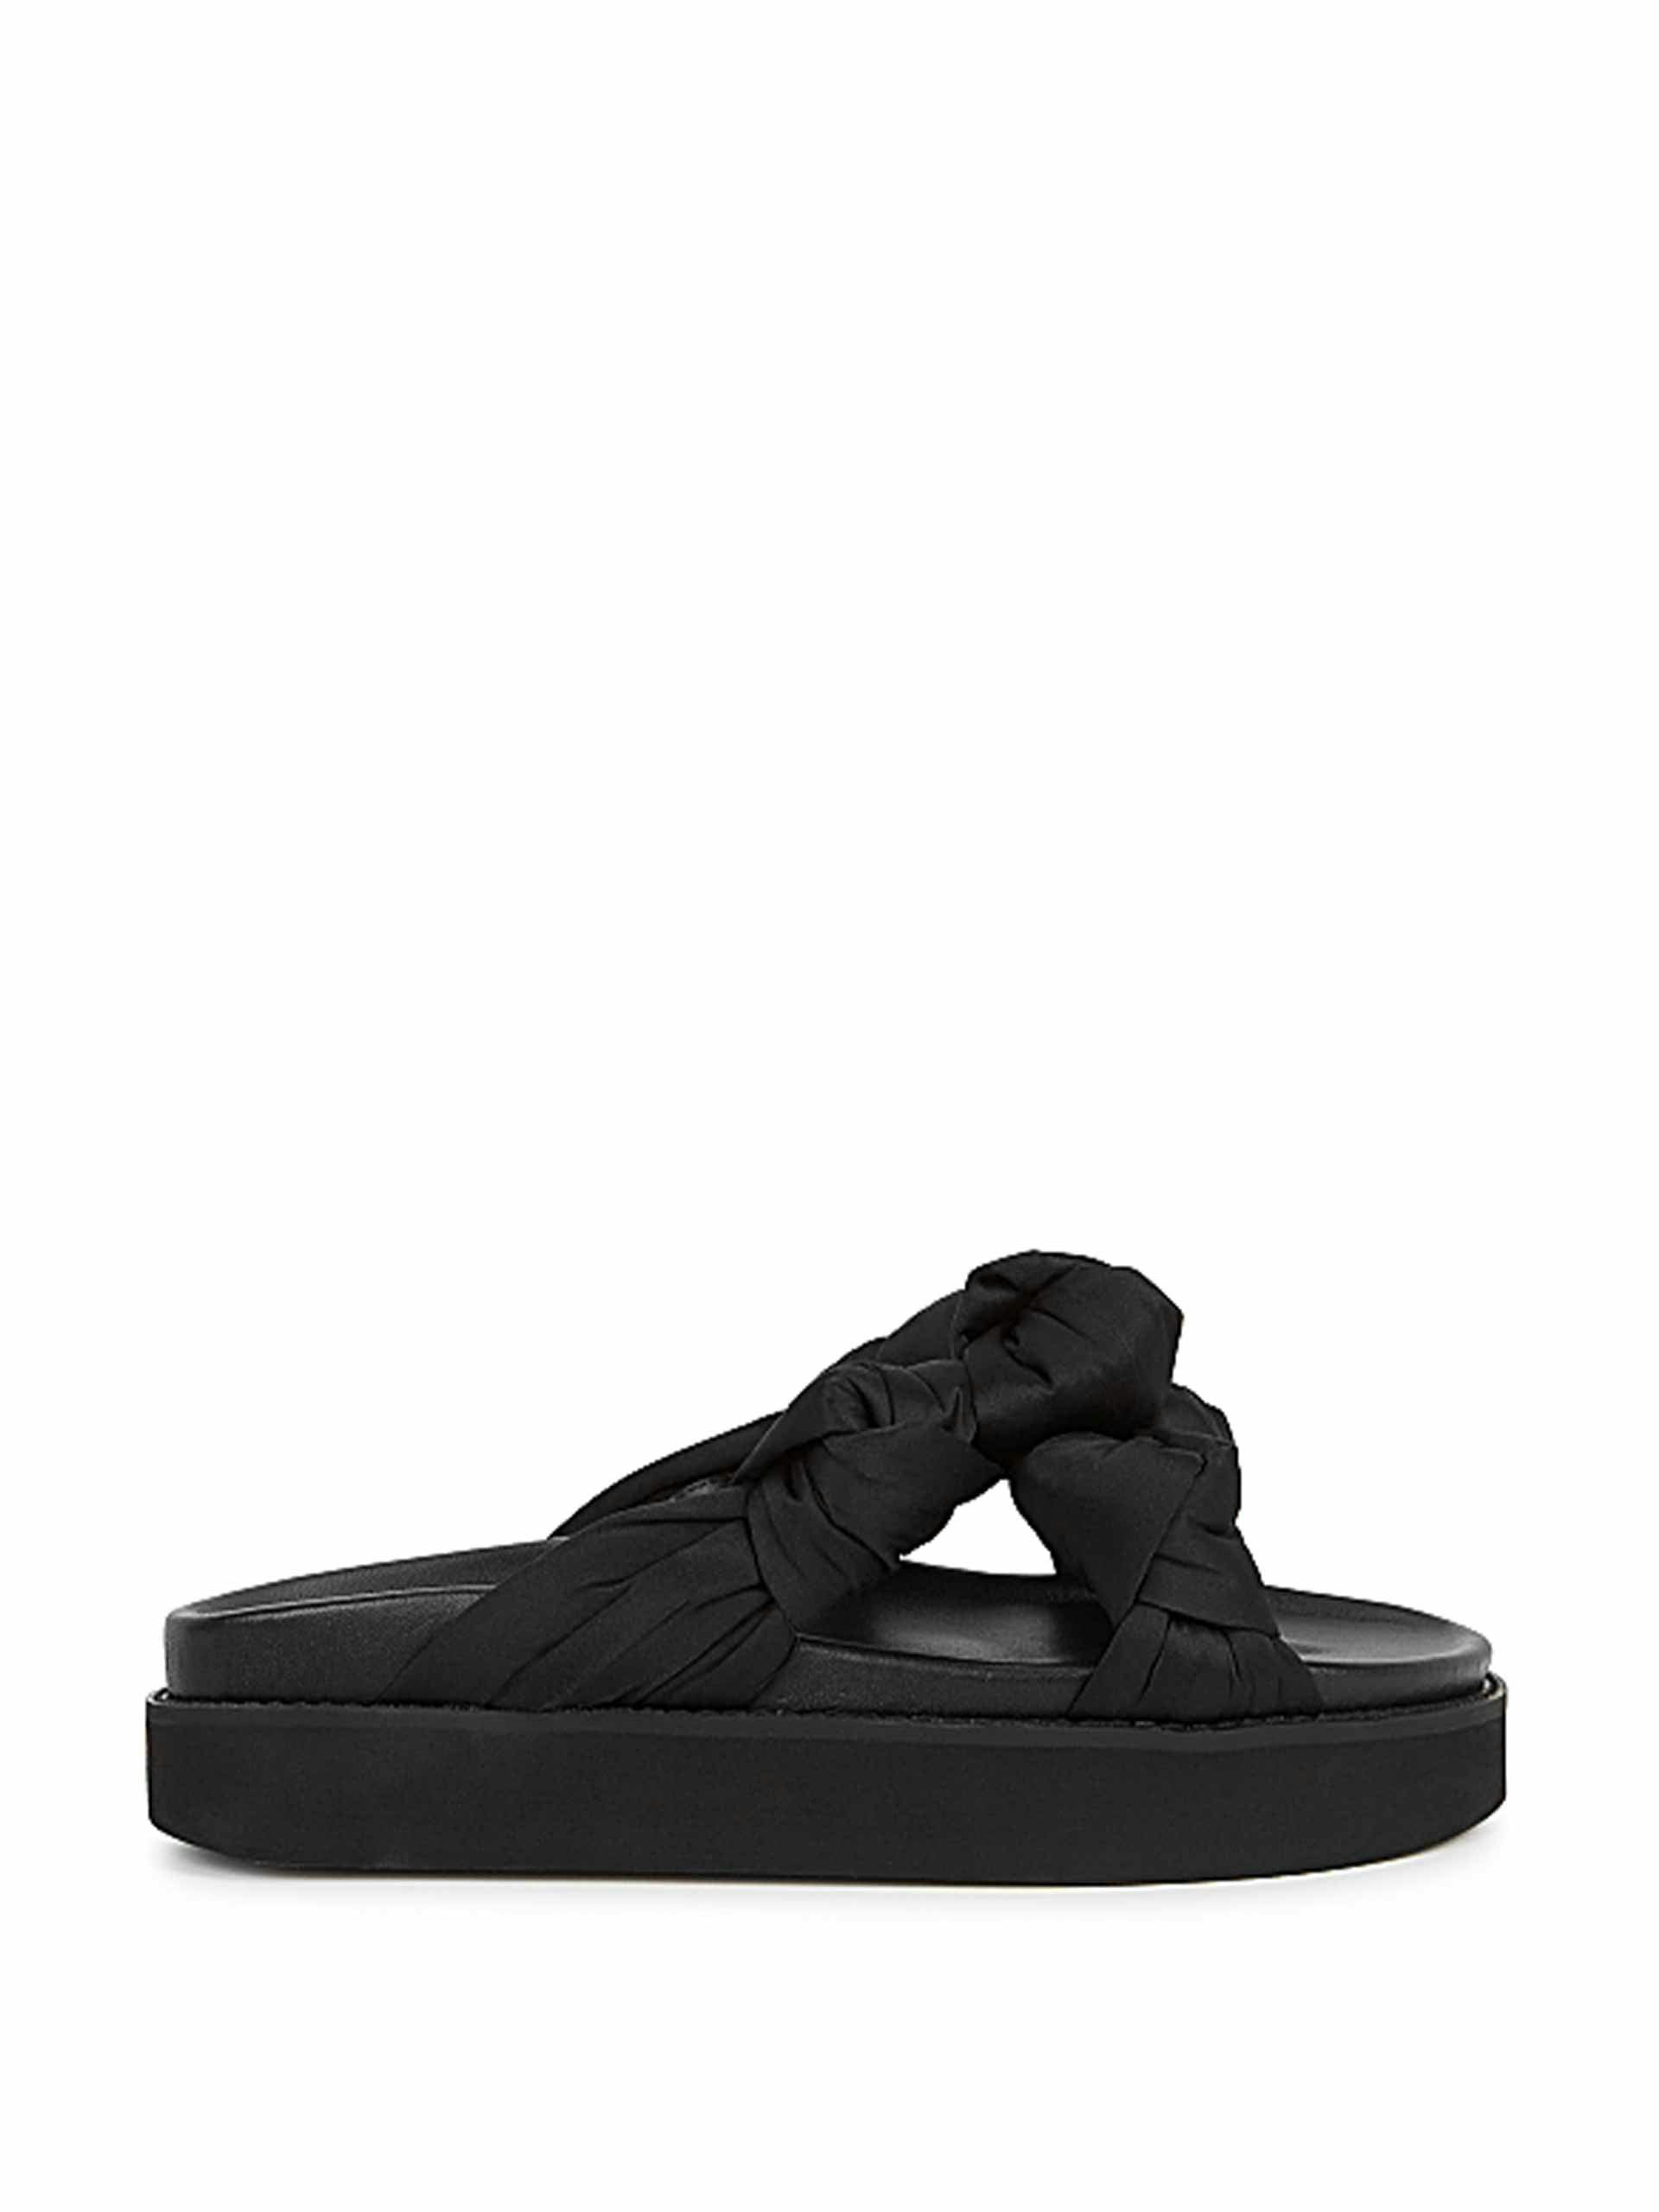 Black satin platform sandals